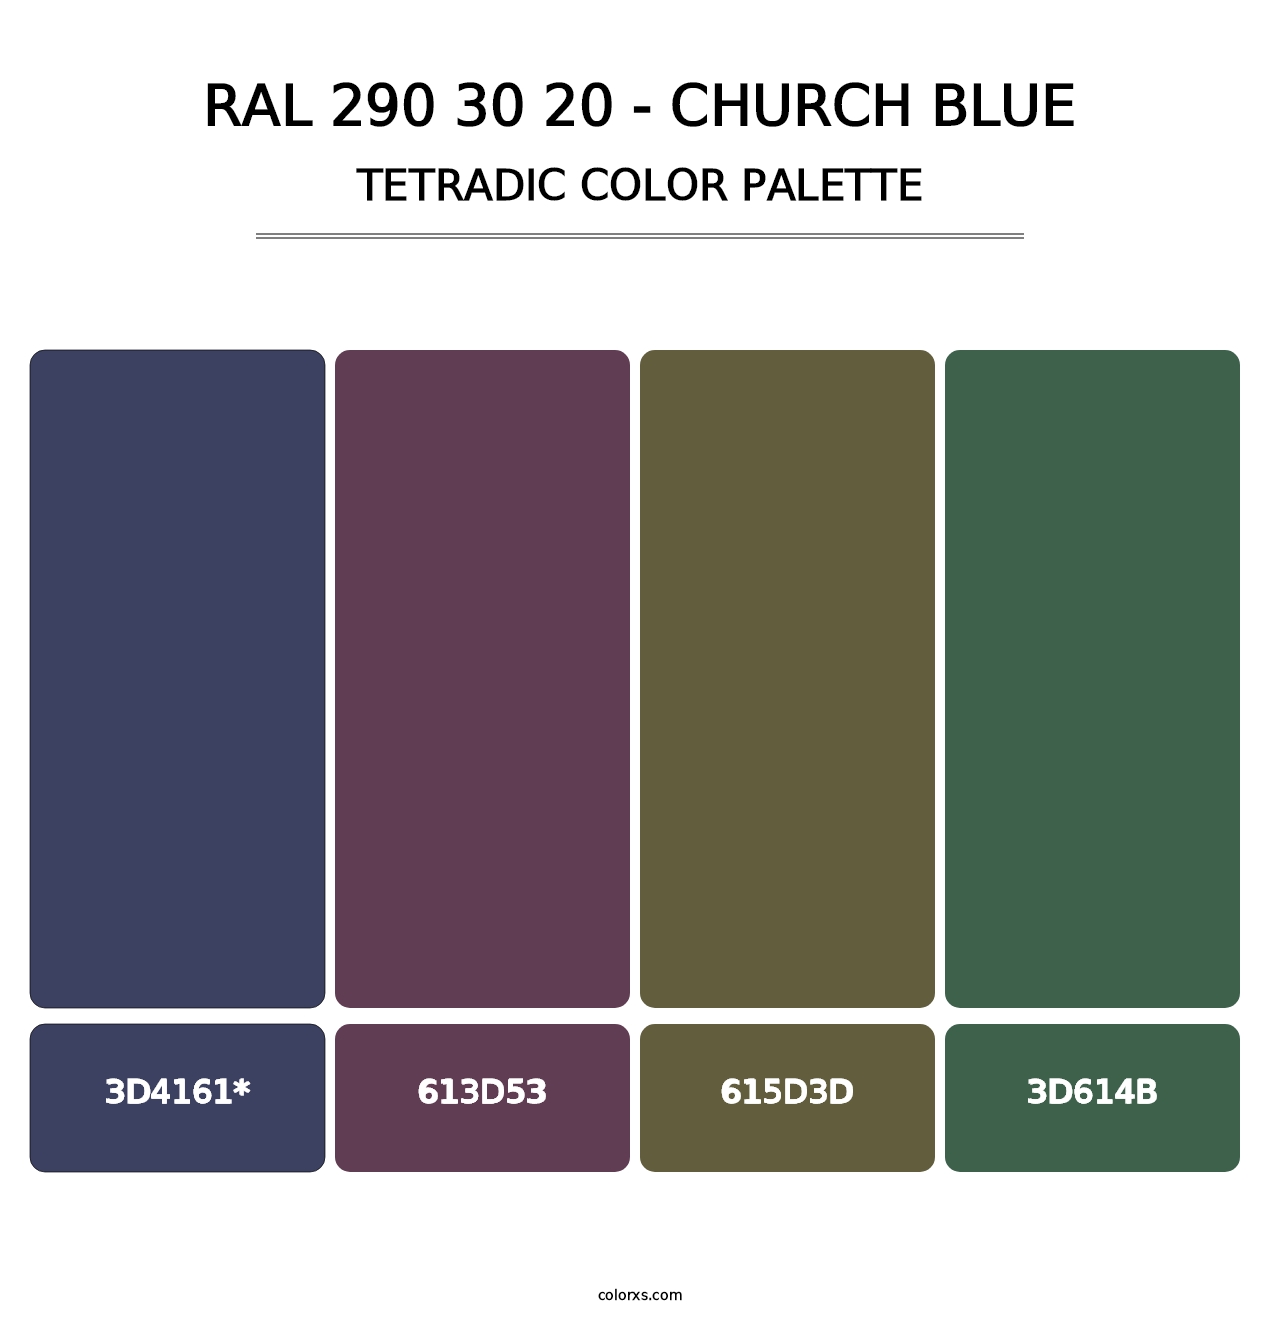 RAL 290 30 20 - Church Blue - Tetradic Color Palette